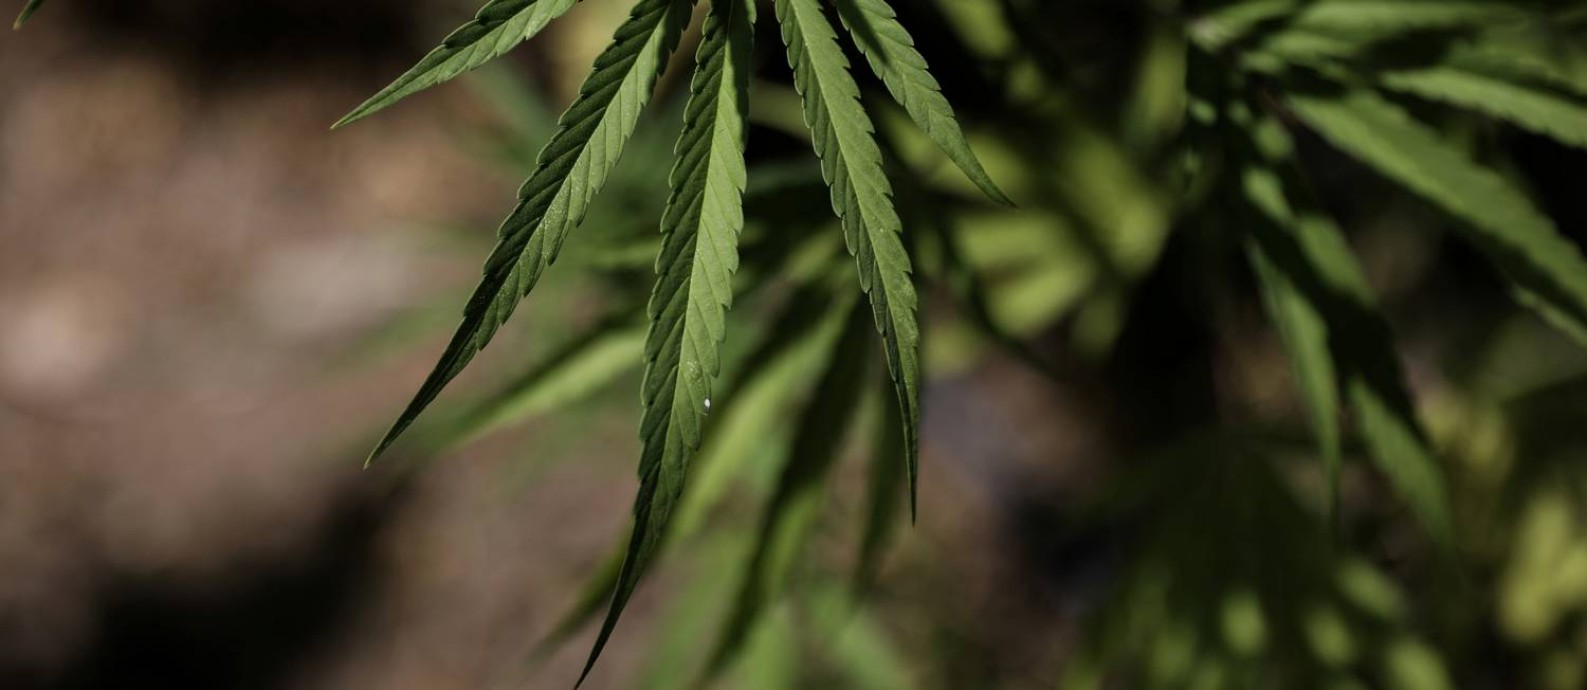 FILE PHOTO: Leaves of a Carmagnola hemp strain plant at a medical cannabis plantation in Trikala, Greece, August 26, 2019. REUTERS/Stelios Misinas/File Photo Foto: Stelios Misinas / REUTERS